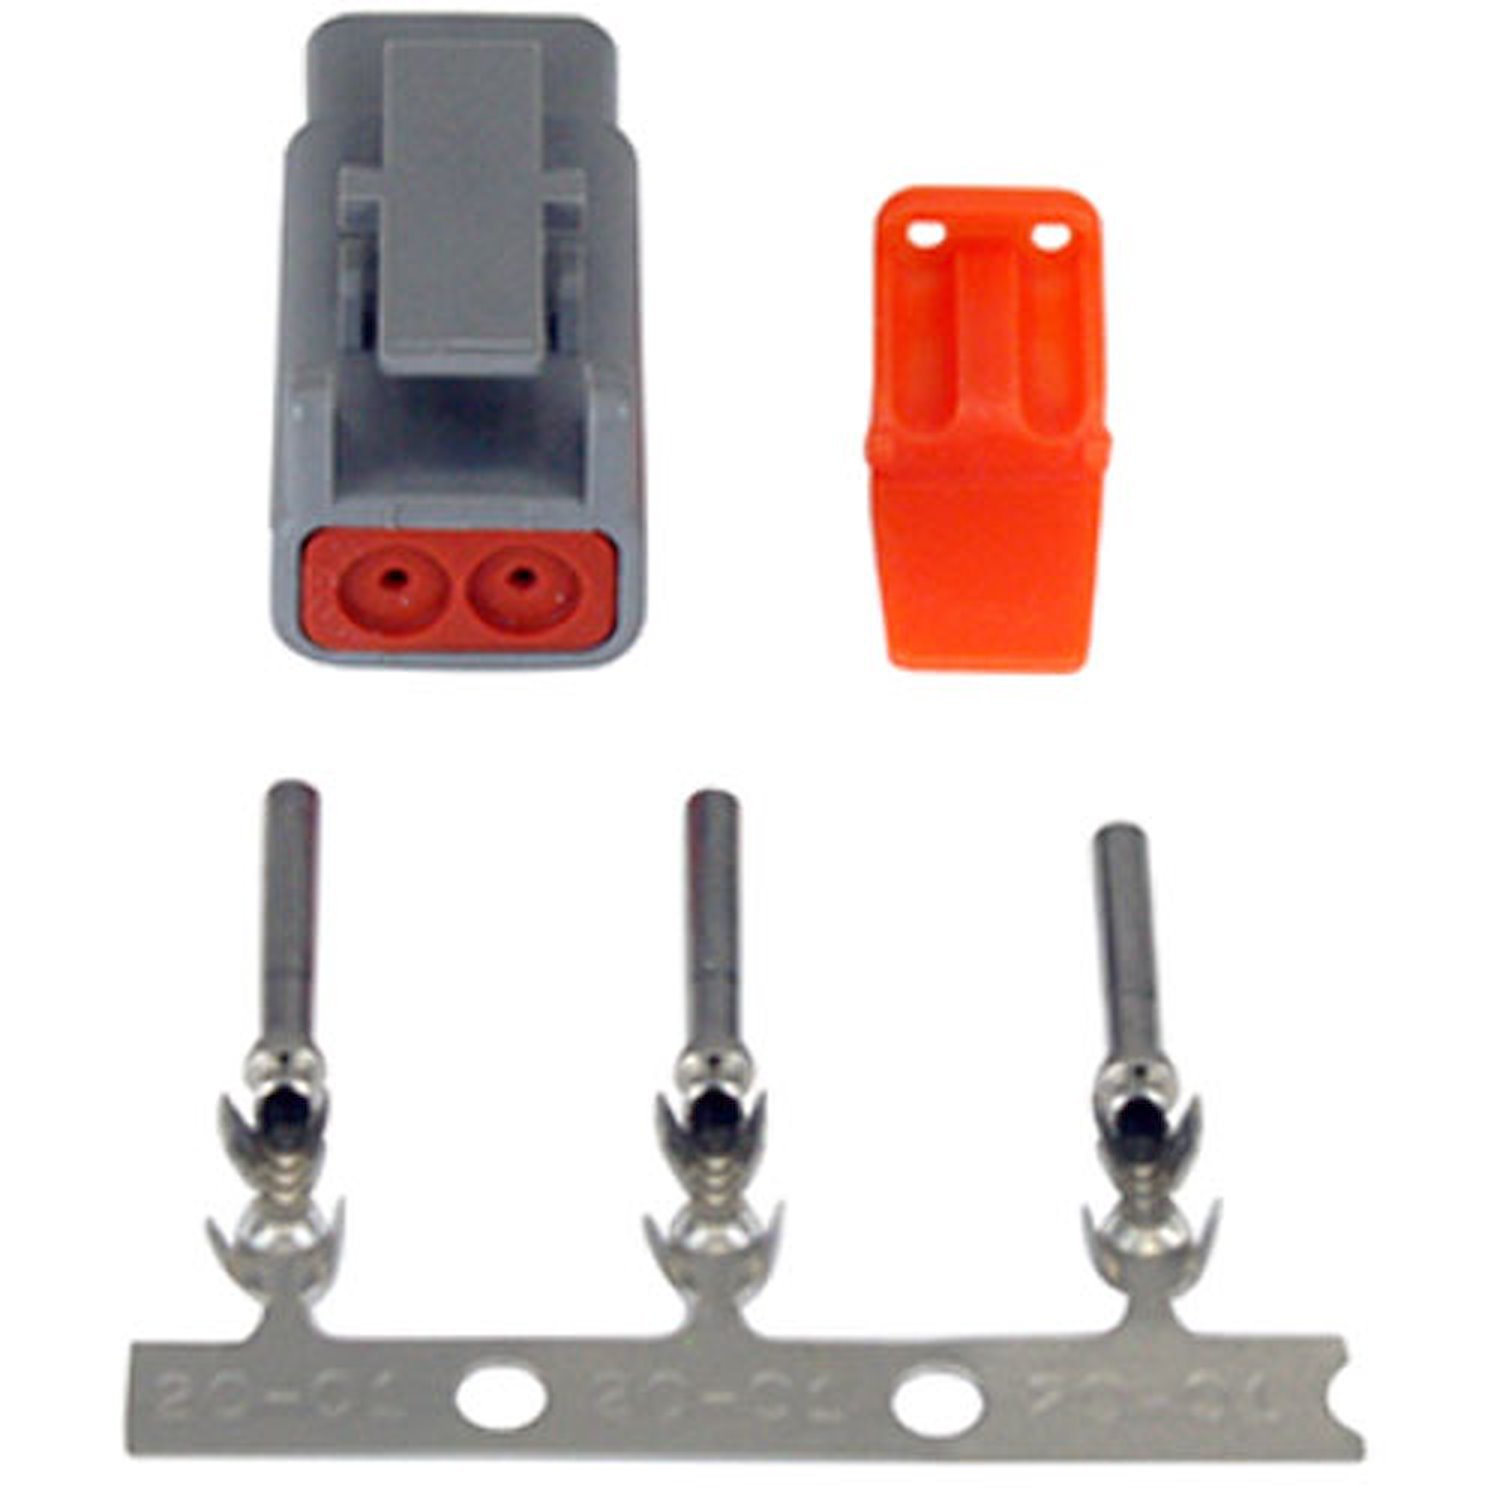 DTM-Style 2-Way Plug Connector Kit Includes Plug, Plug